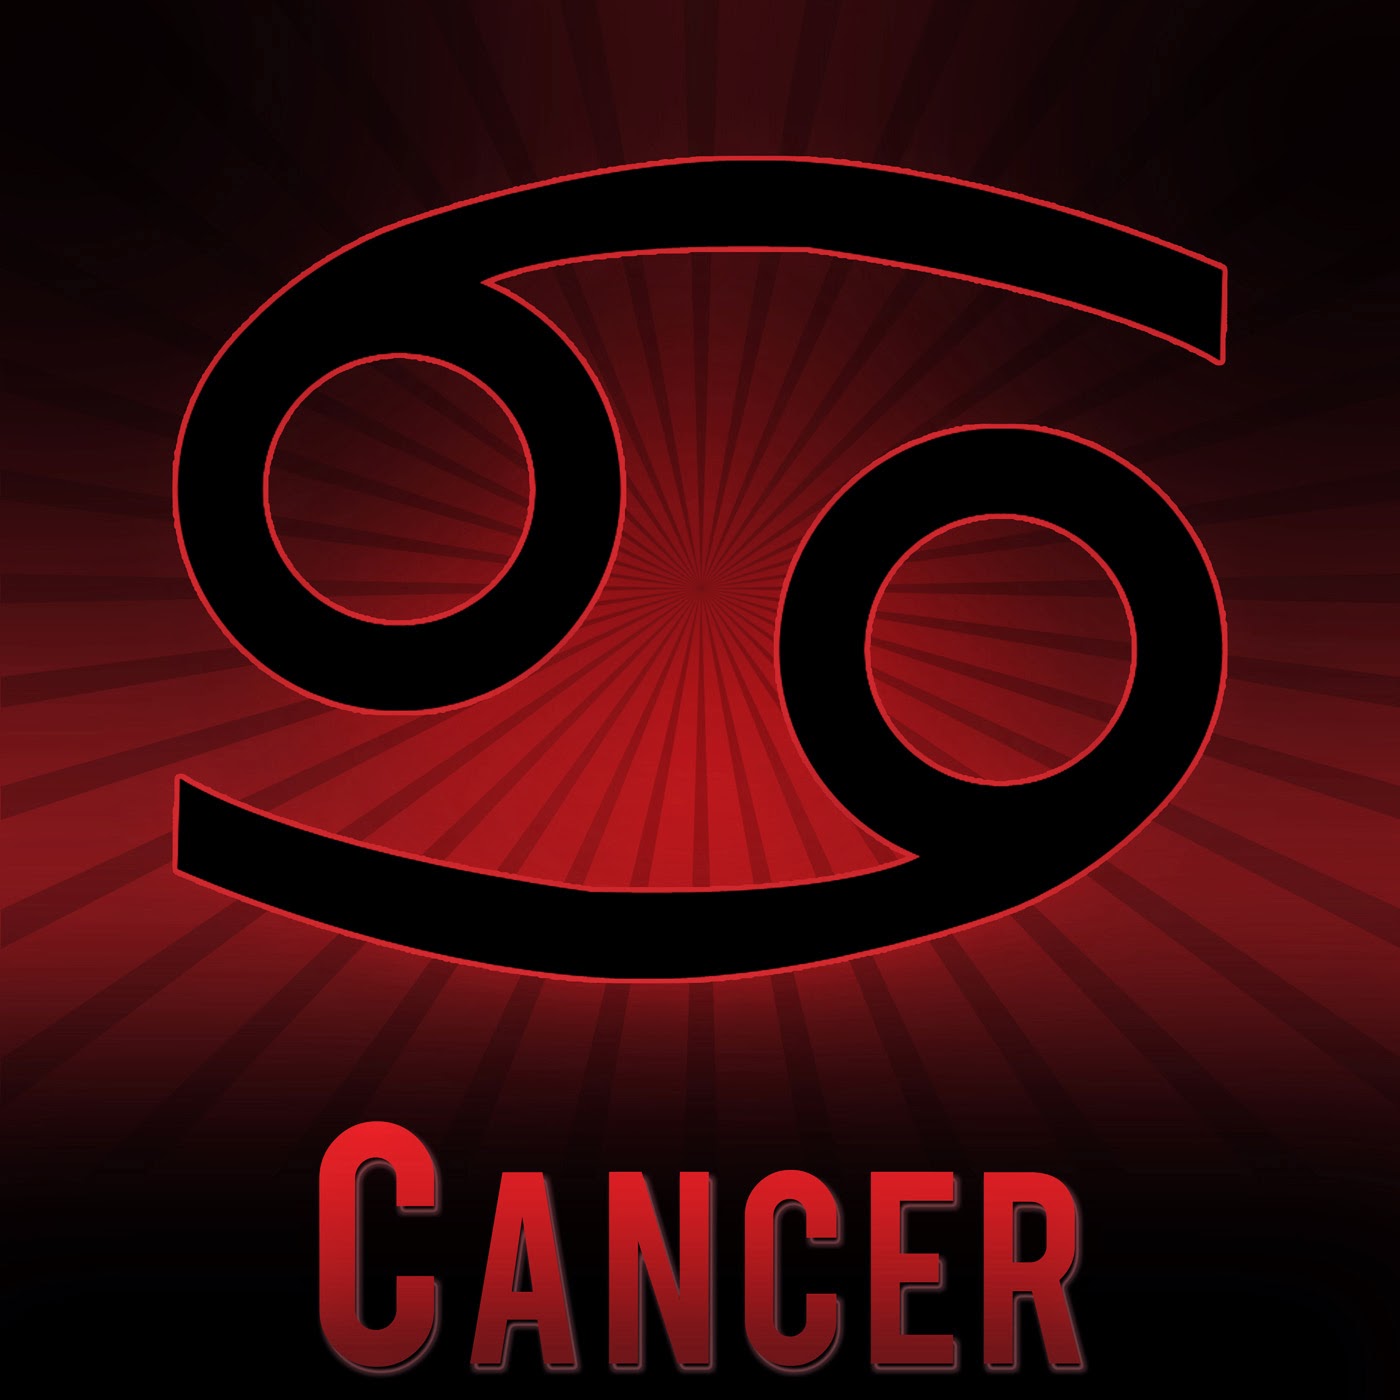 Kumpulan Gambar Dp Bbm Zodiak Cancer Kumpulan Gambar Meme Lucu